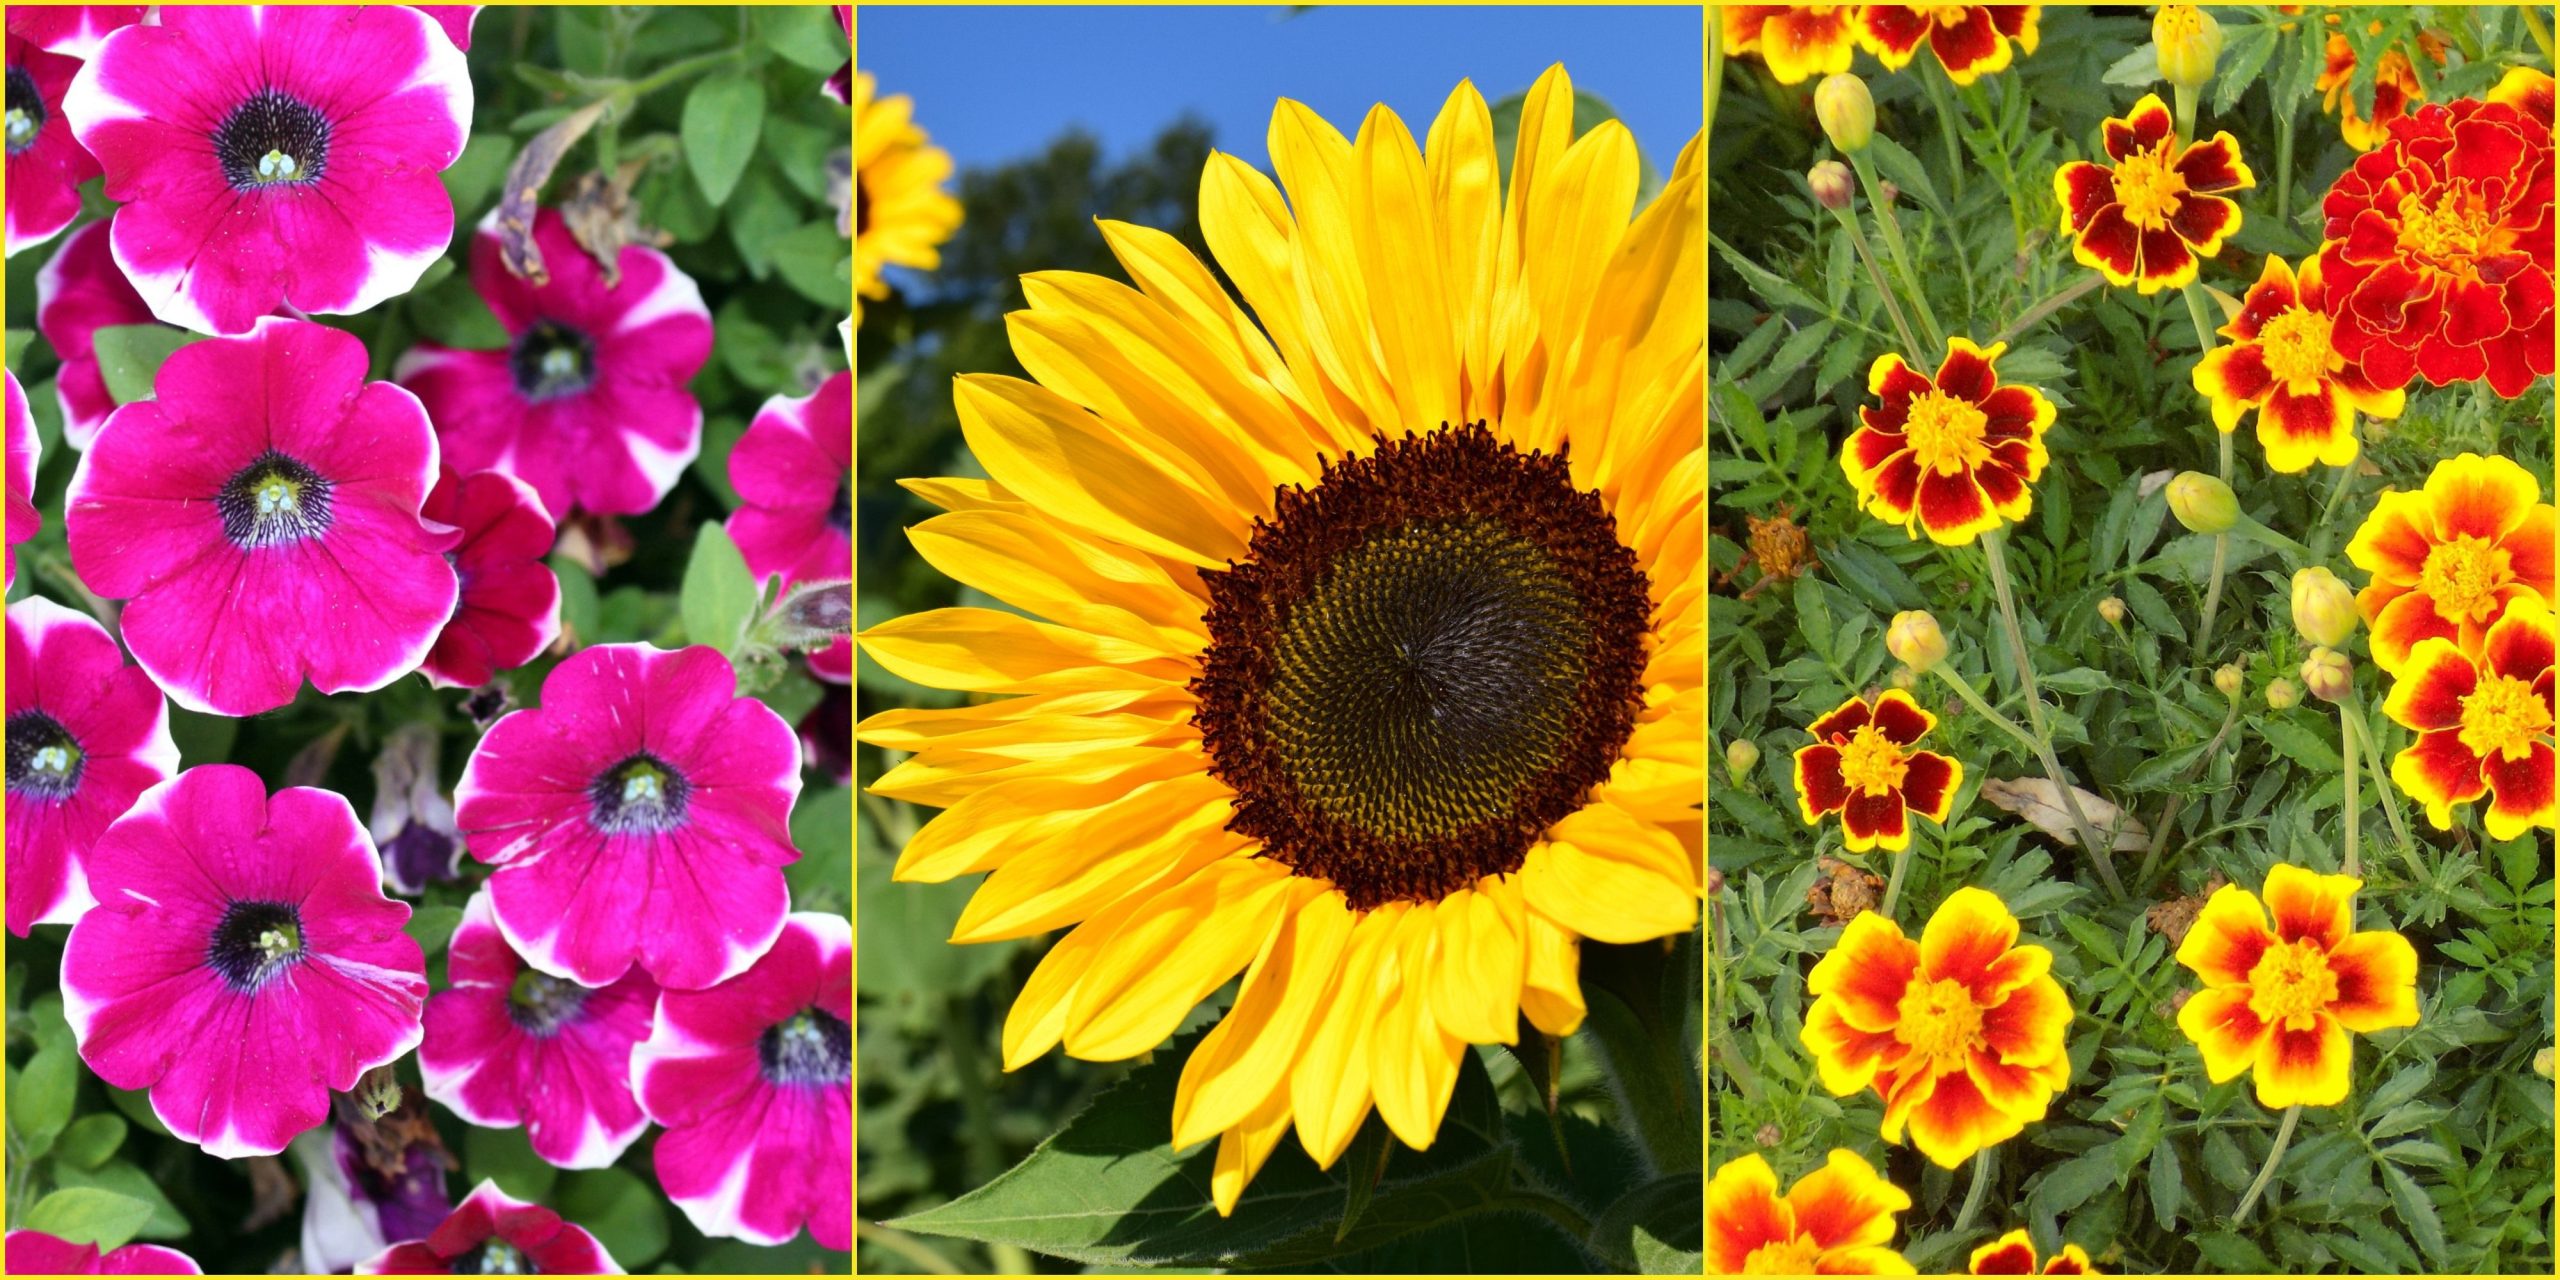 7 Fast Growing Flowers For Your Garden – Best Summer Flower Seeds